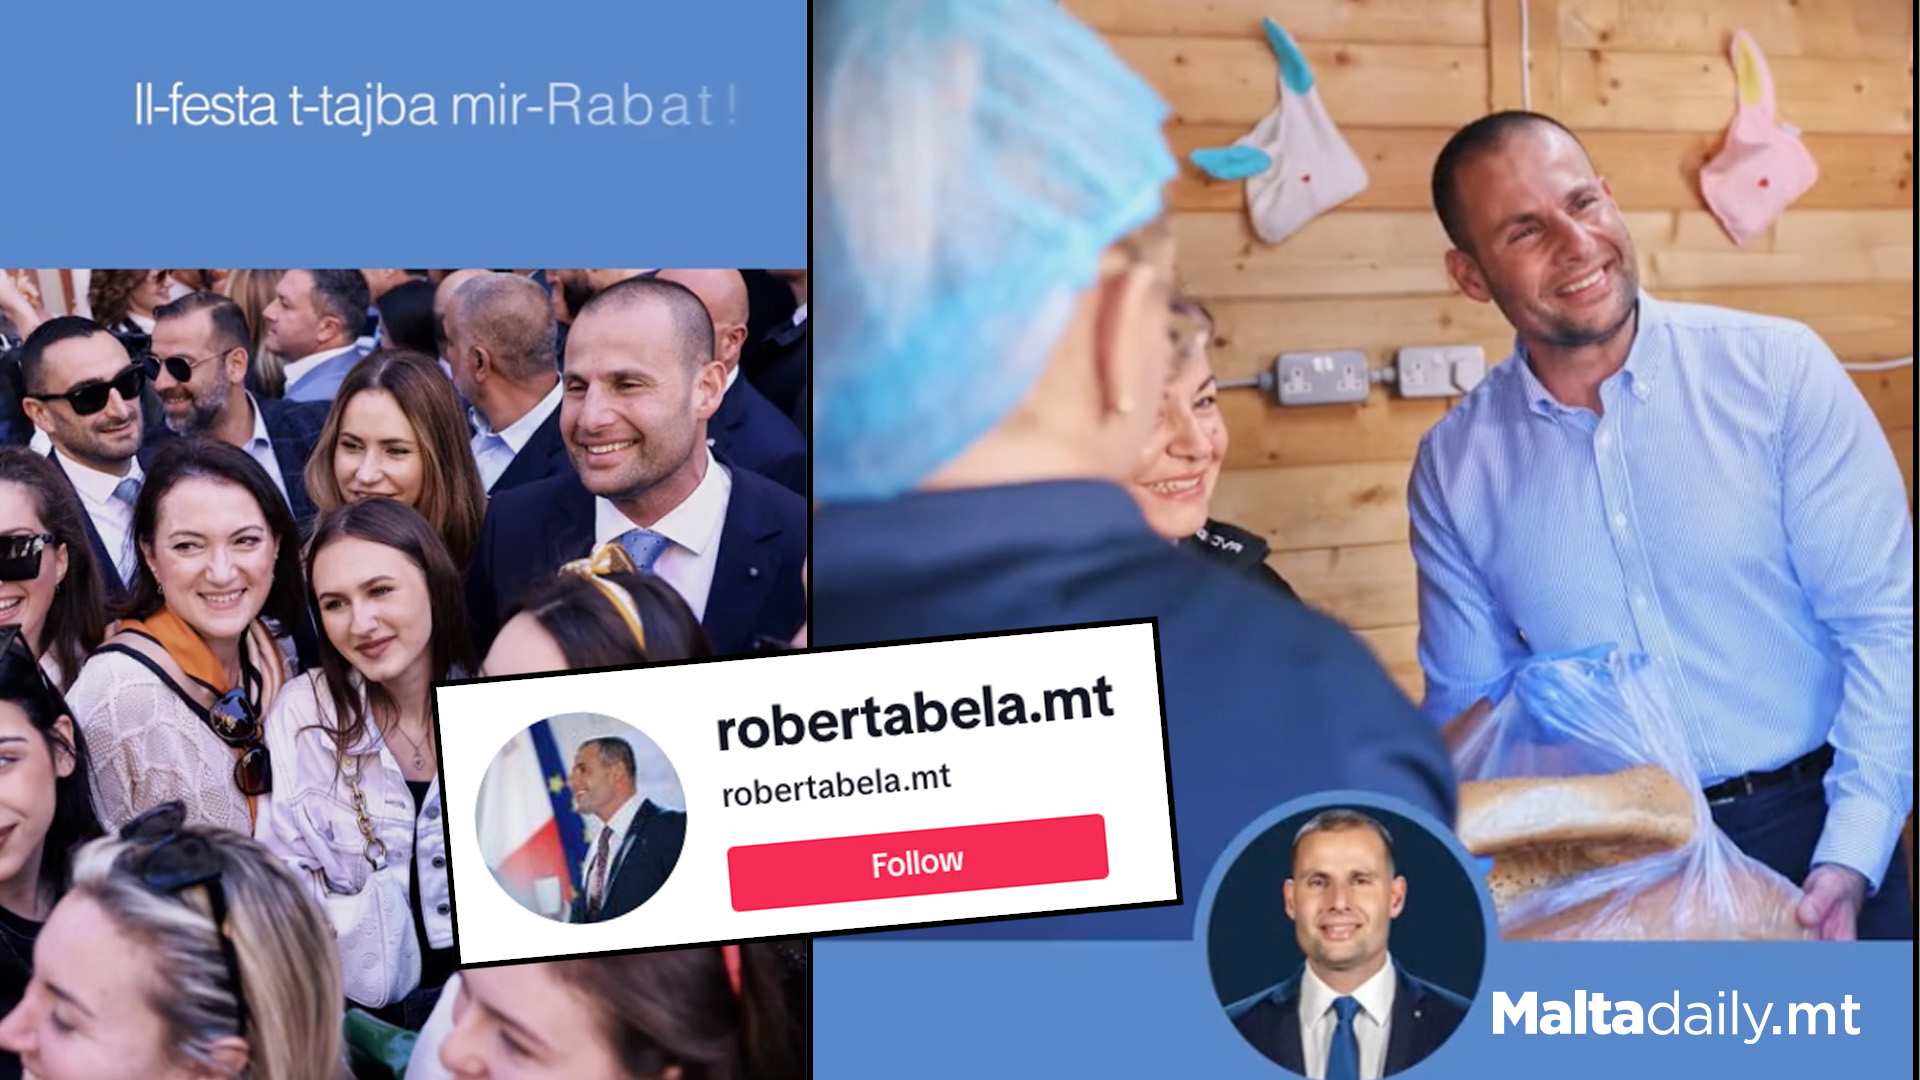 Prime Minister Robert Abela Opens TikTok Account